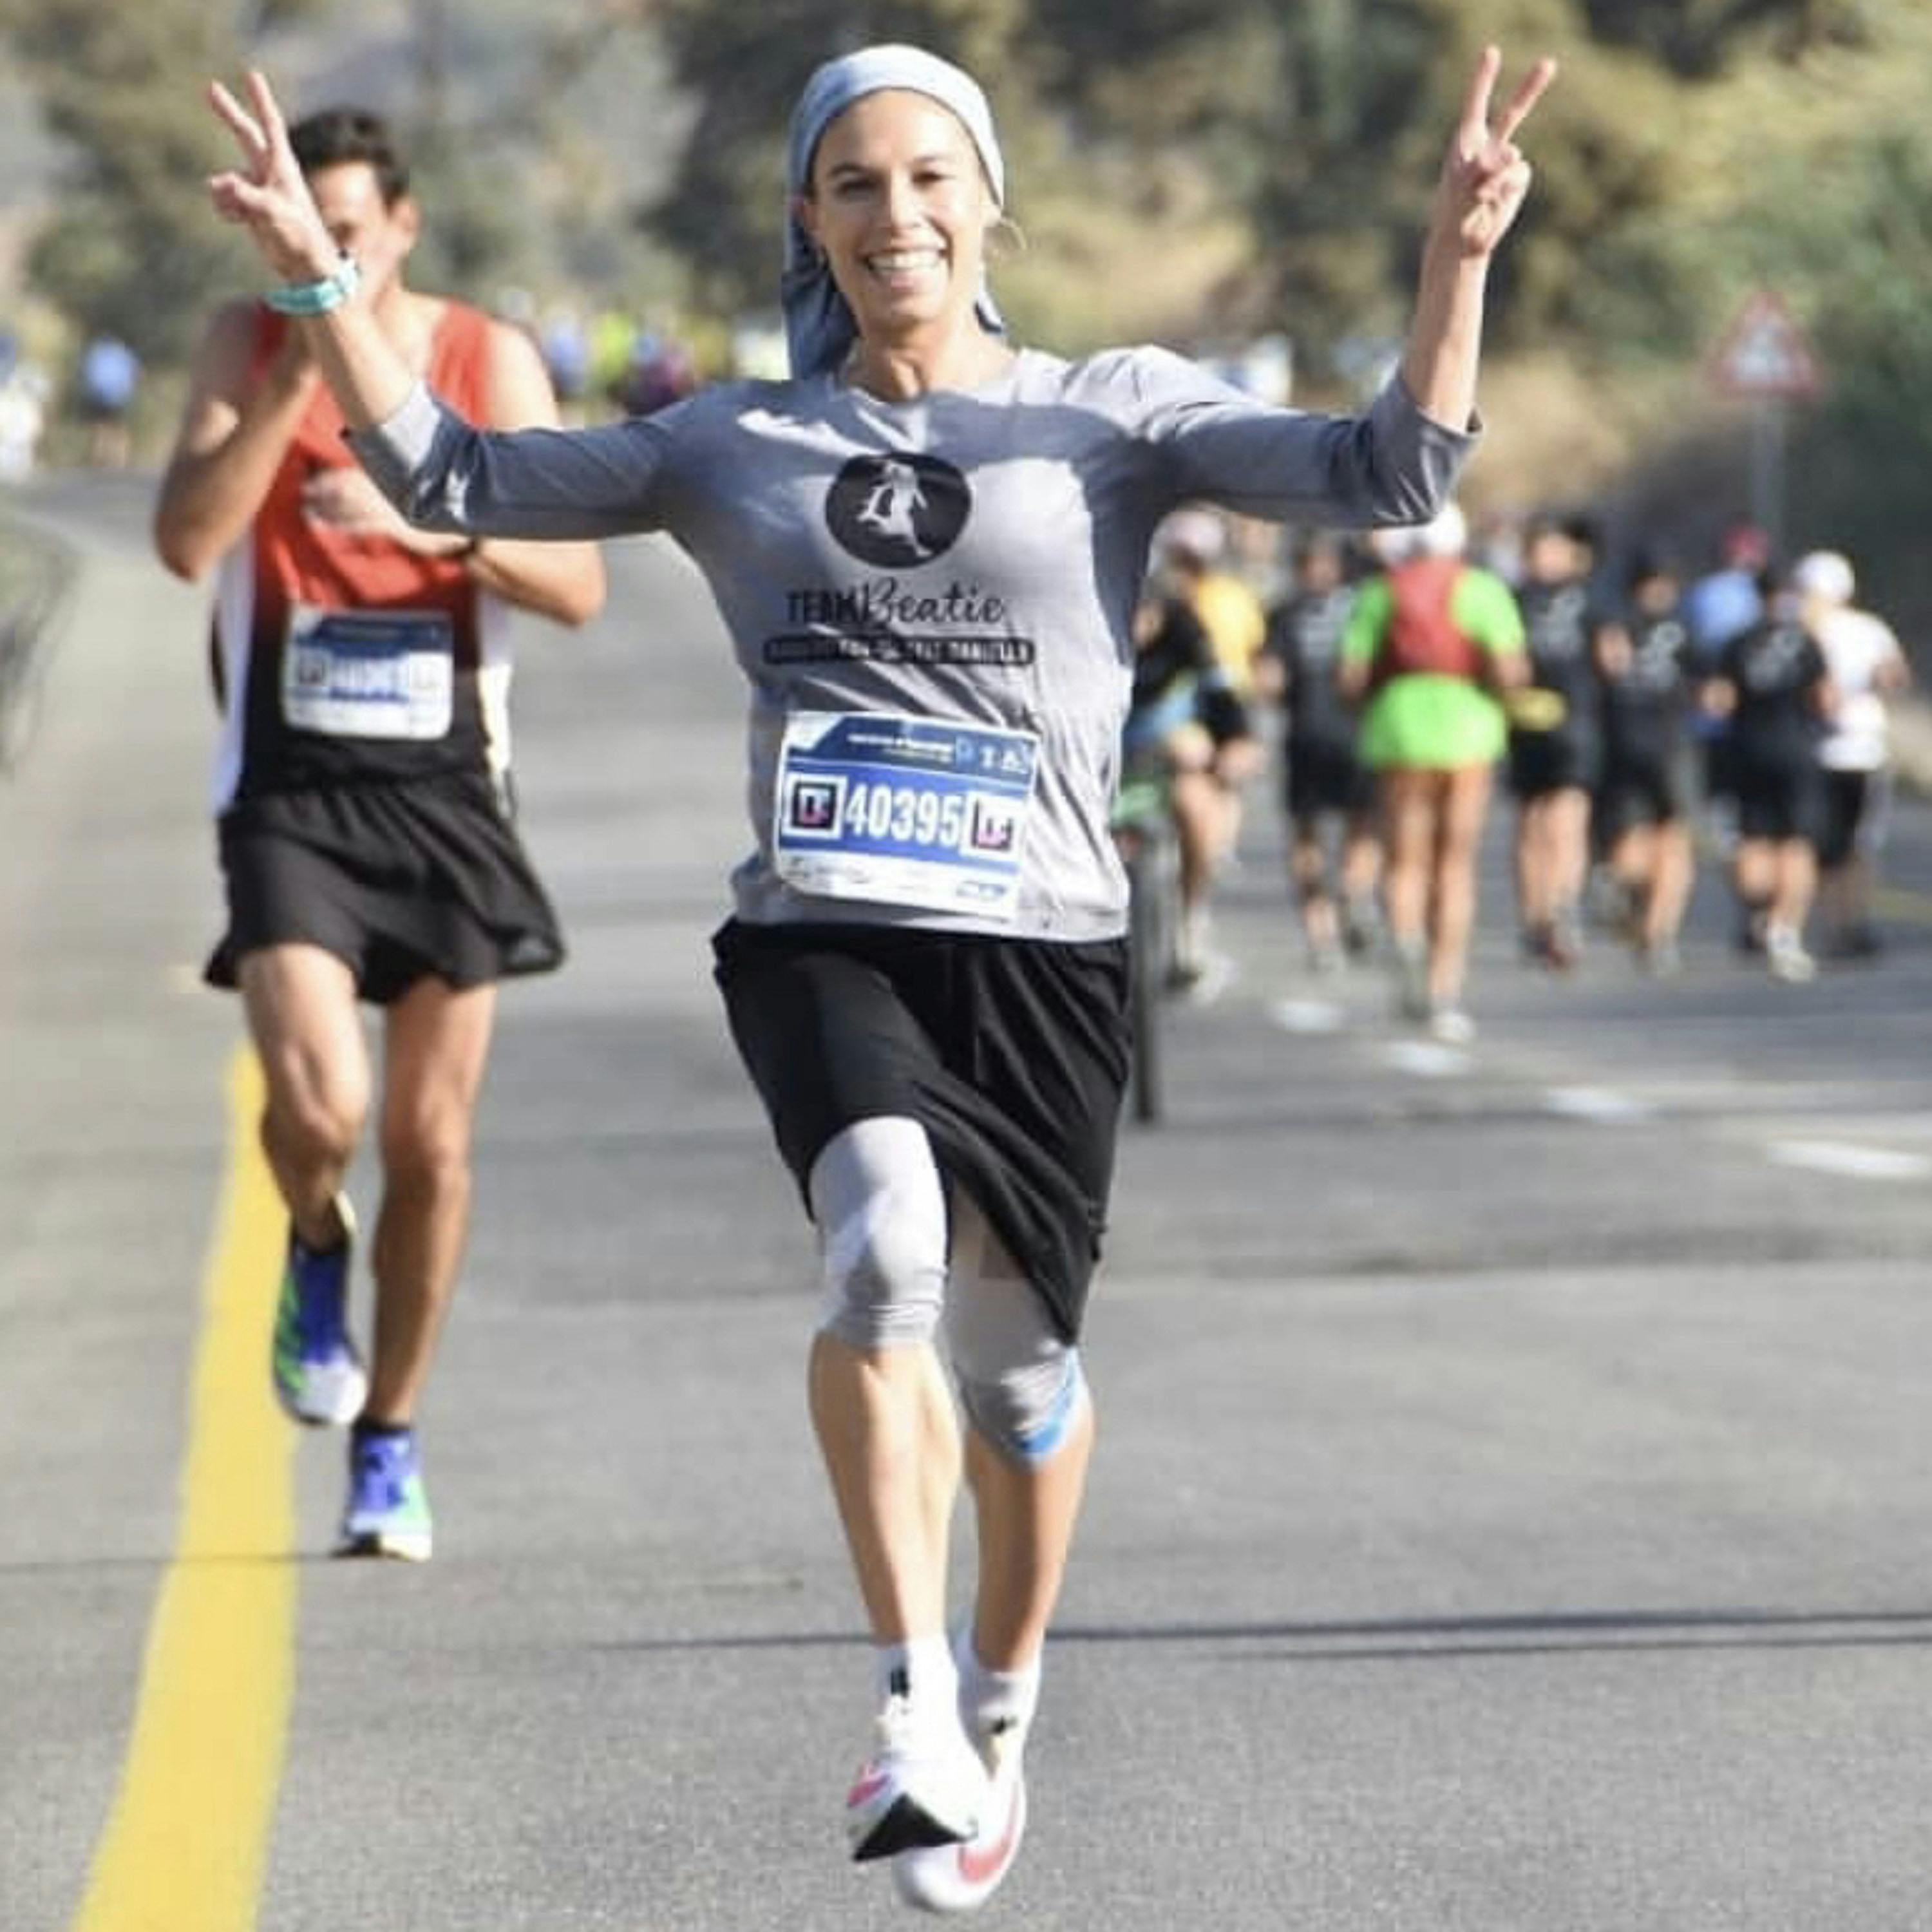 68: Beatie Deutsch: marathon champ, charedi mum: “mental & spiritual strength unlocks the physical”